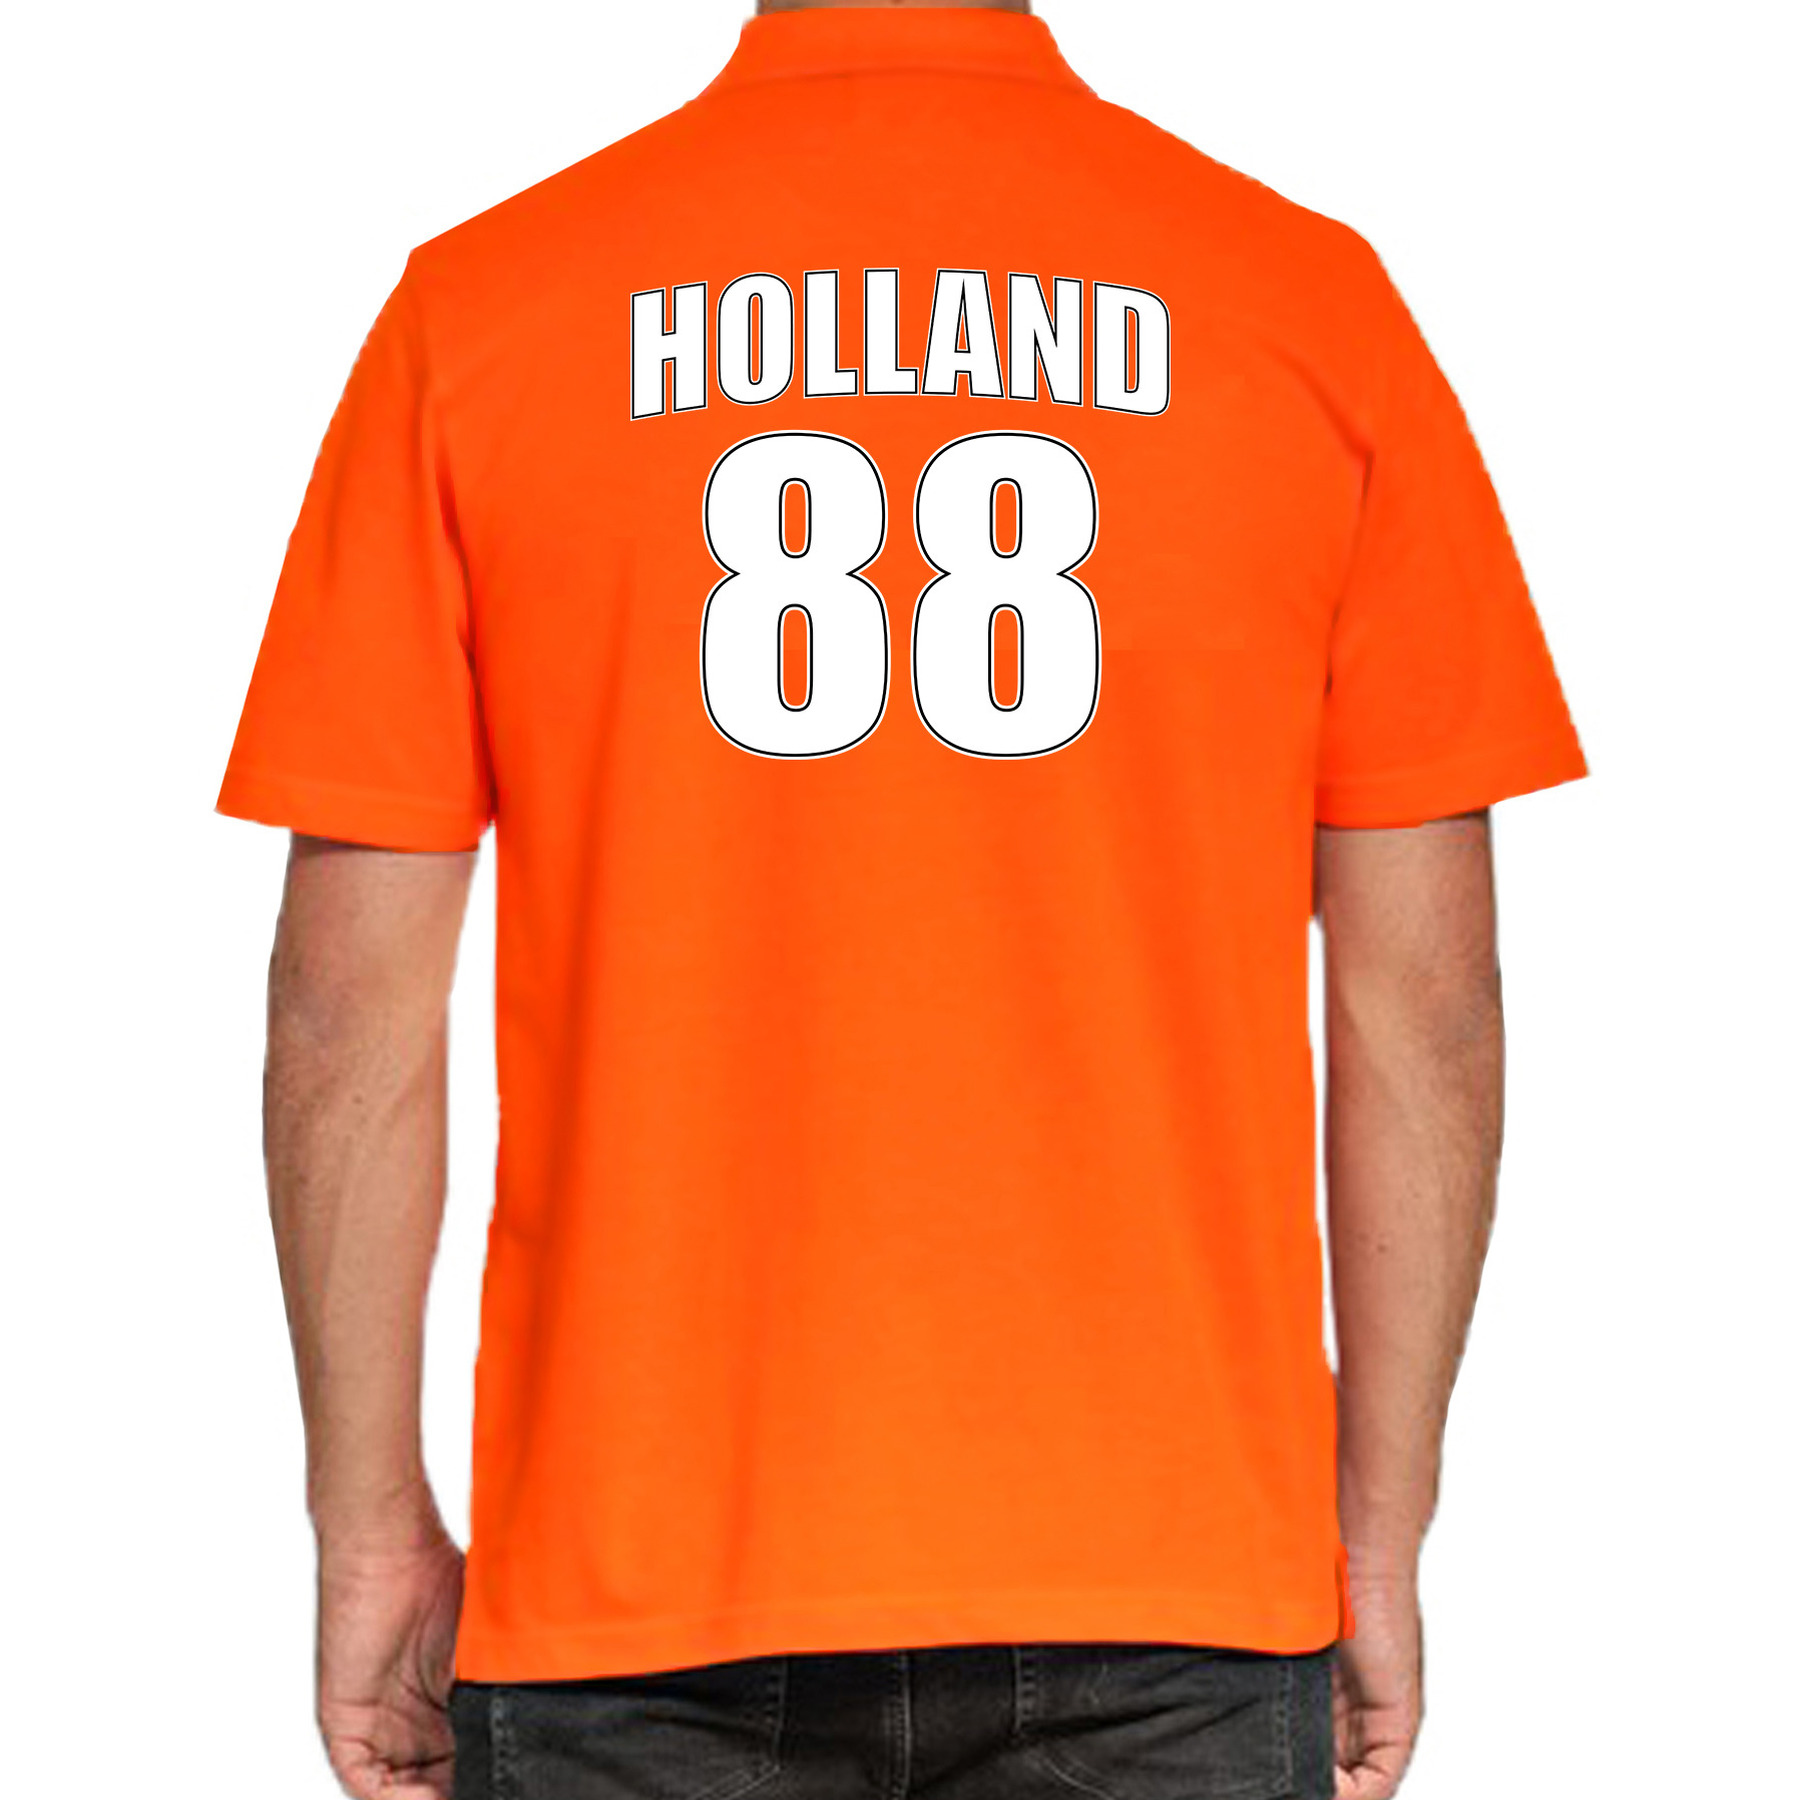 Oranje supporter poloshirt met rugnummer 88 - Holland - Nederland fan shirt voor heren